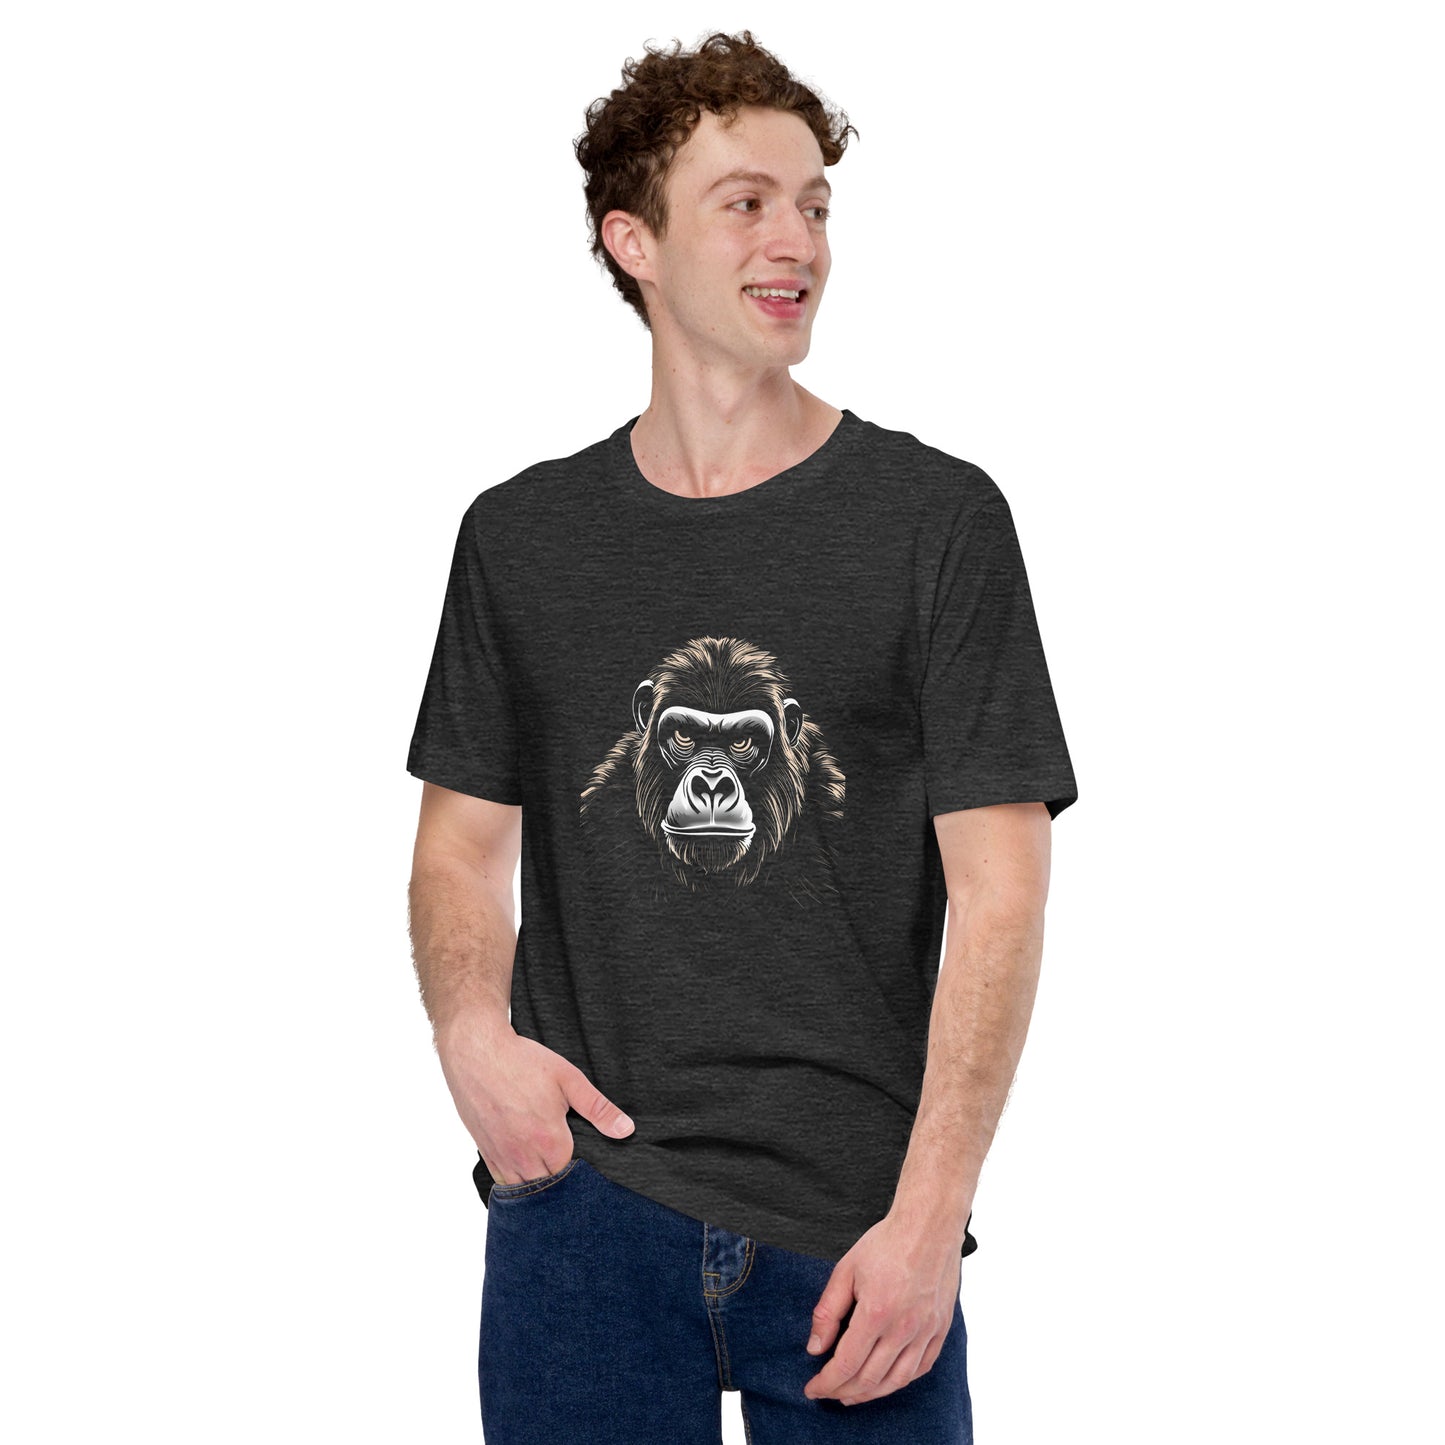 Gorilla 6 t-shirt